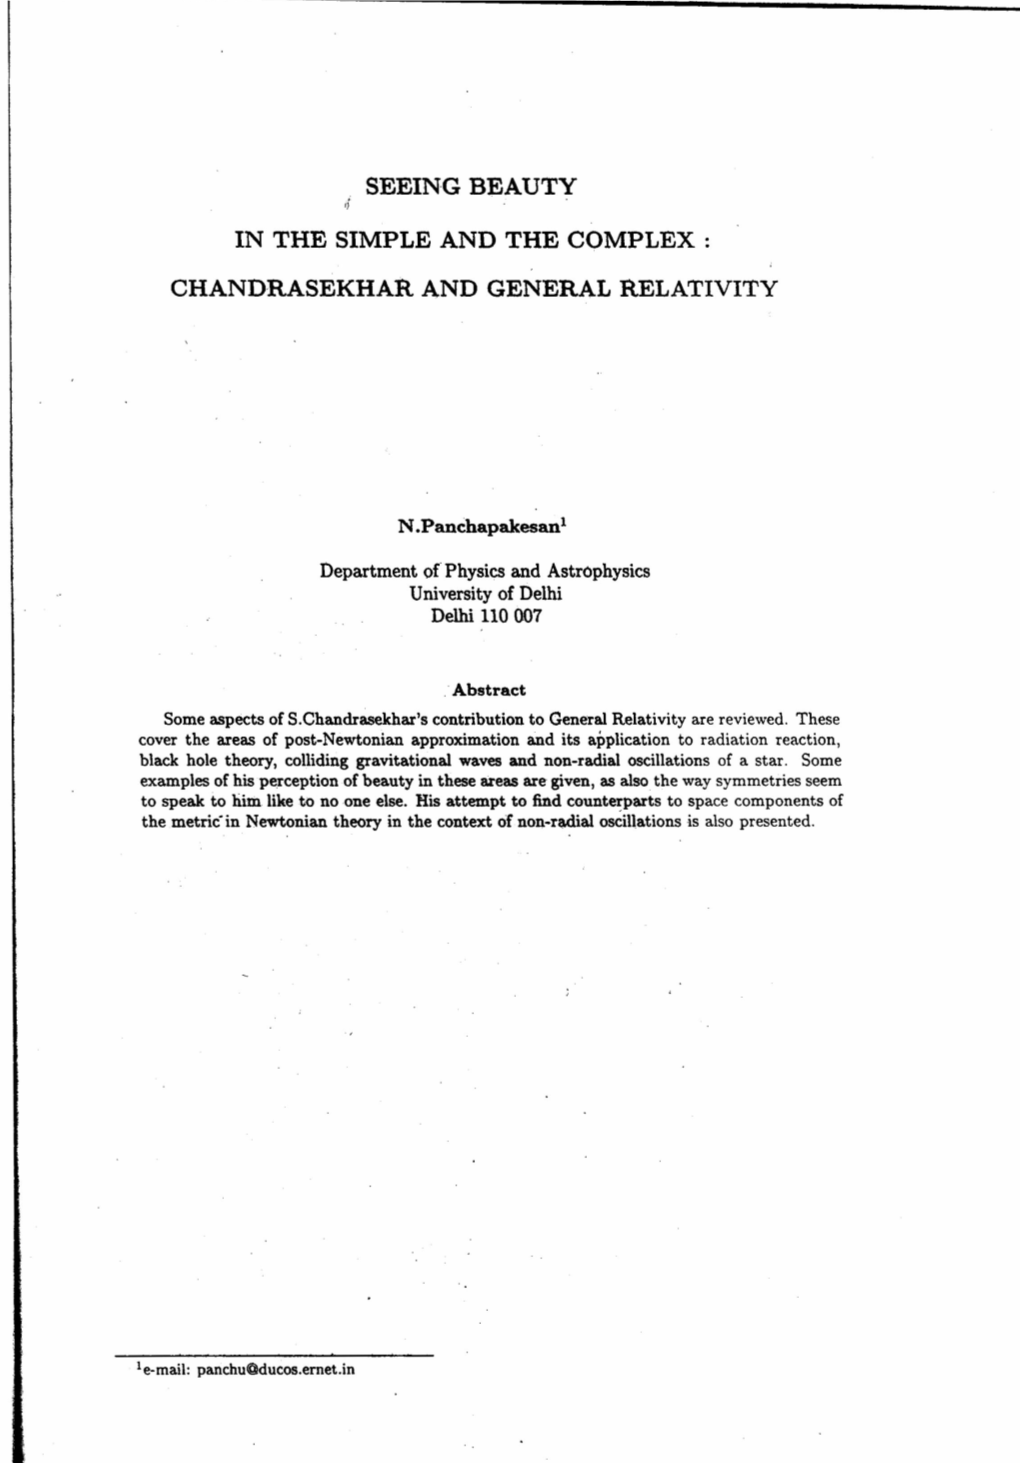 Chandrasekhar and General Relativity